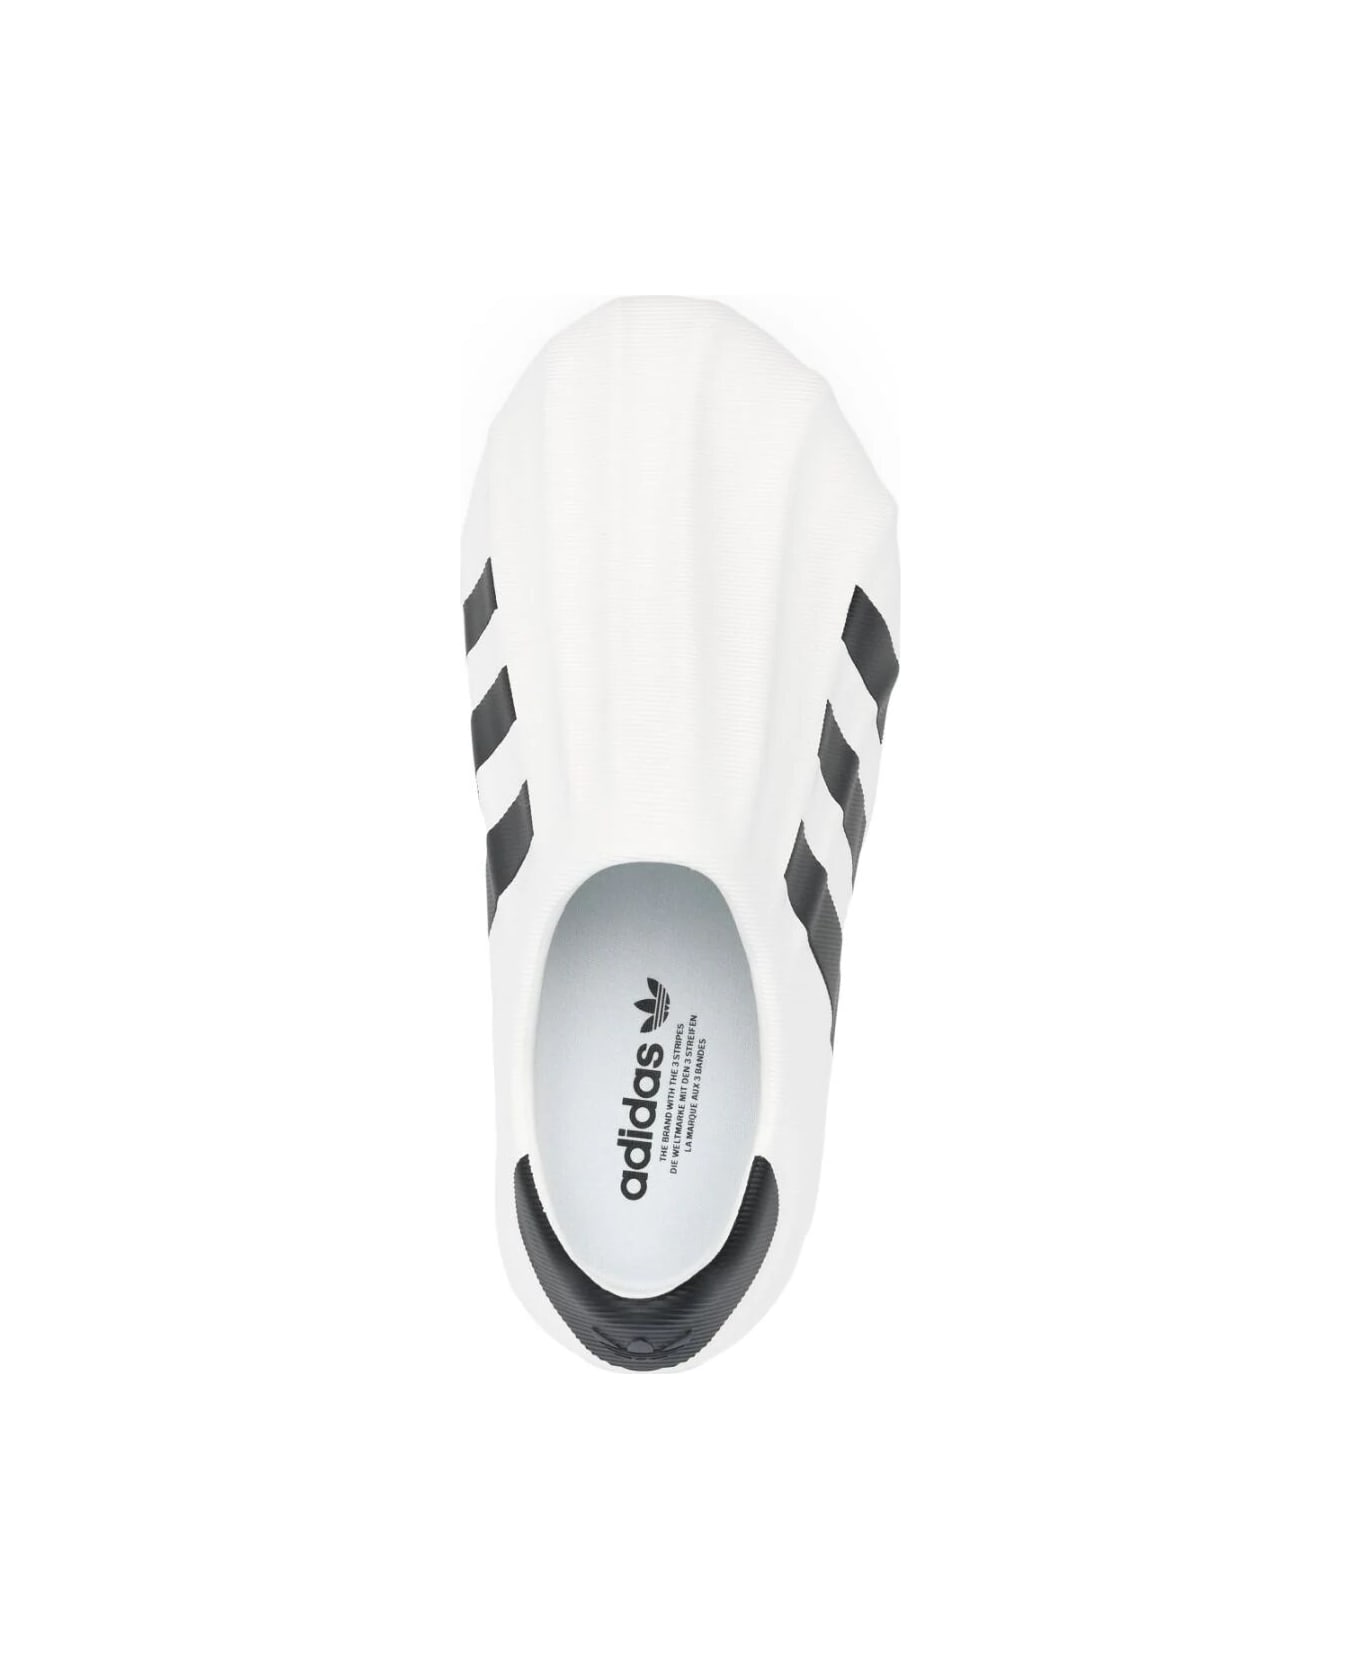 Adidas Adifom Superstar Sneakers - Cwhite Cblack Cblack スニーカー